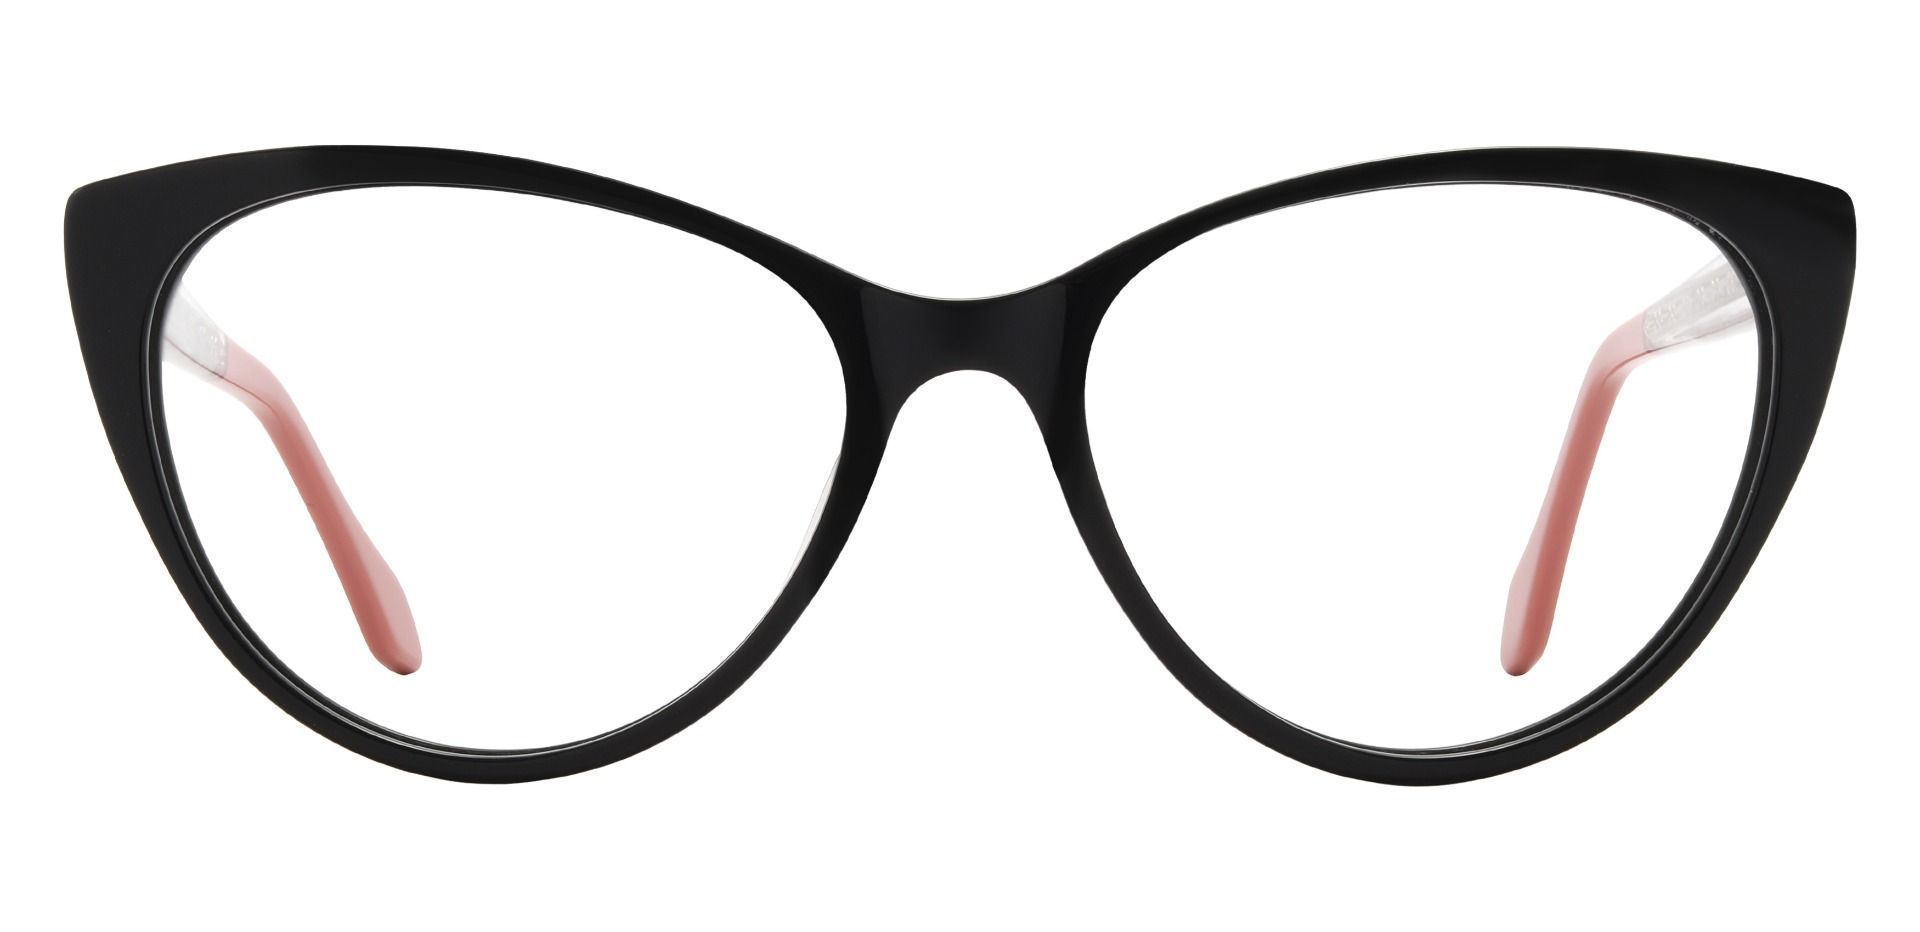 Laramie Cat Eye Prescription Glasses - Black